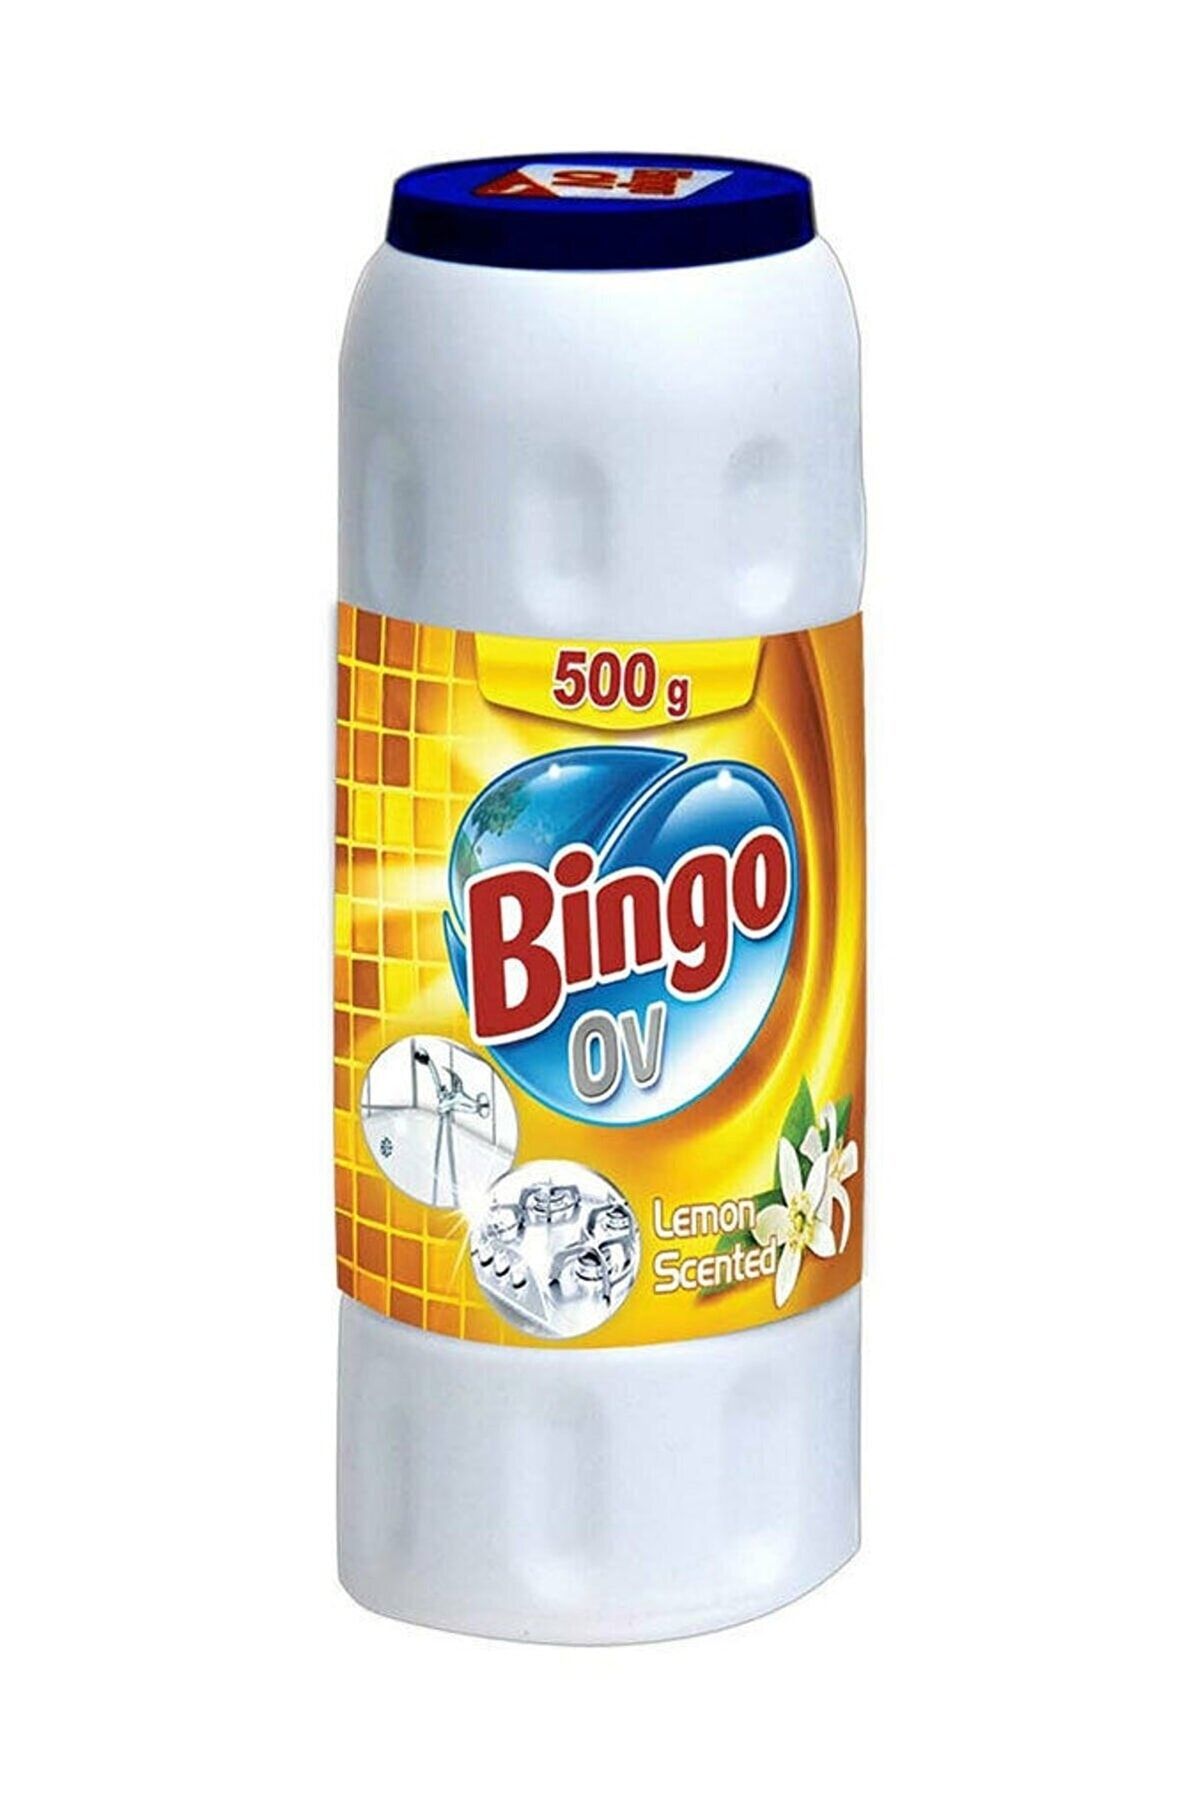 Bingo Ovma Mekanik Temizleme Tozu Limon 500g